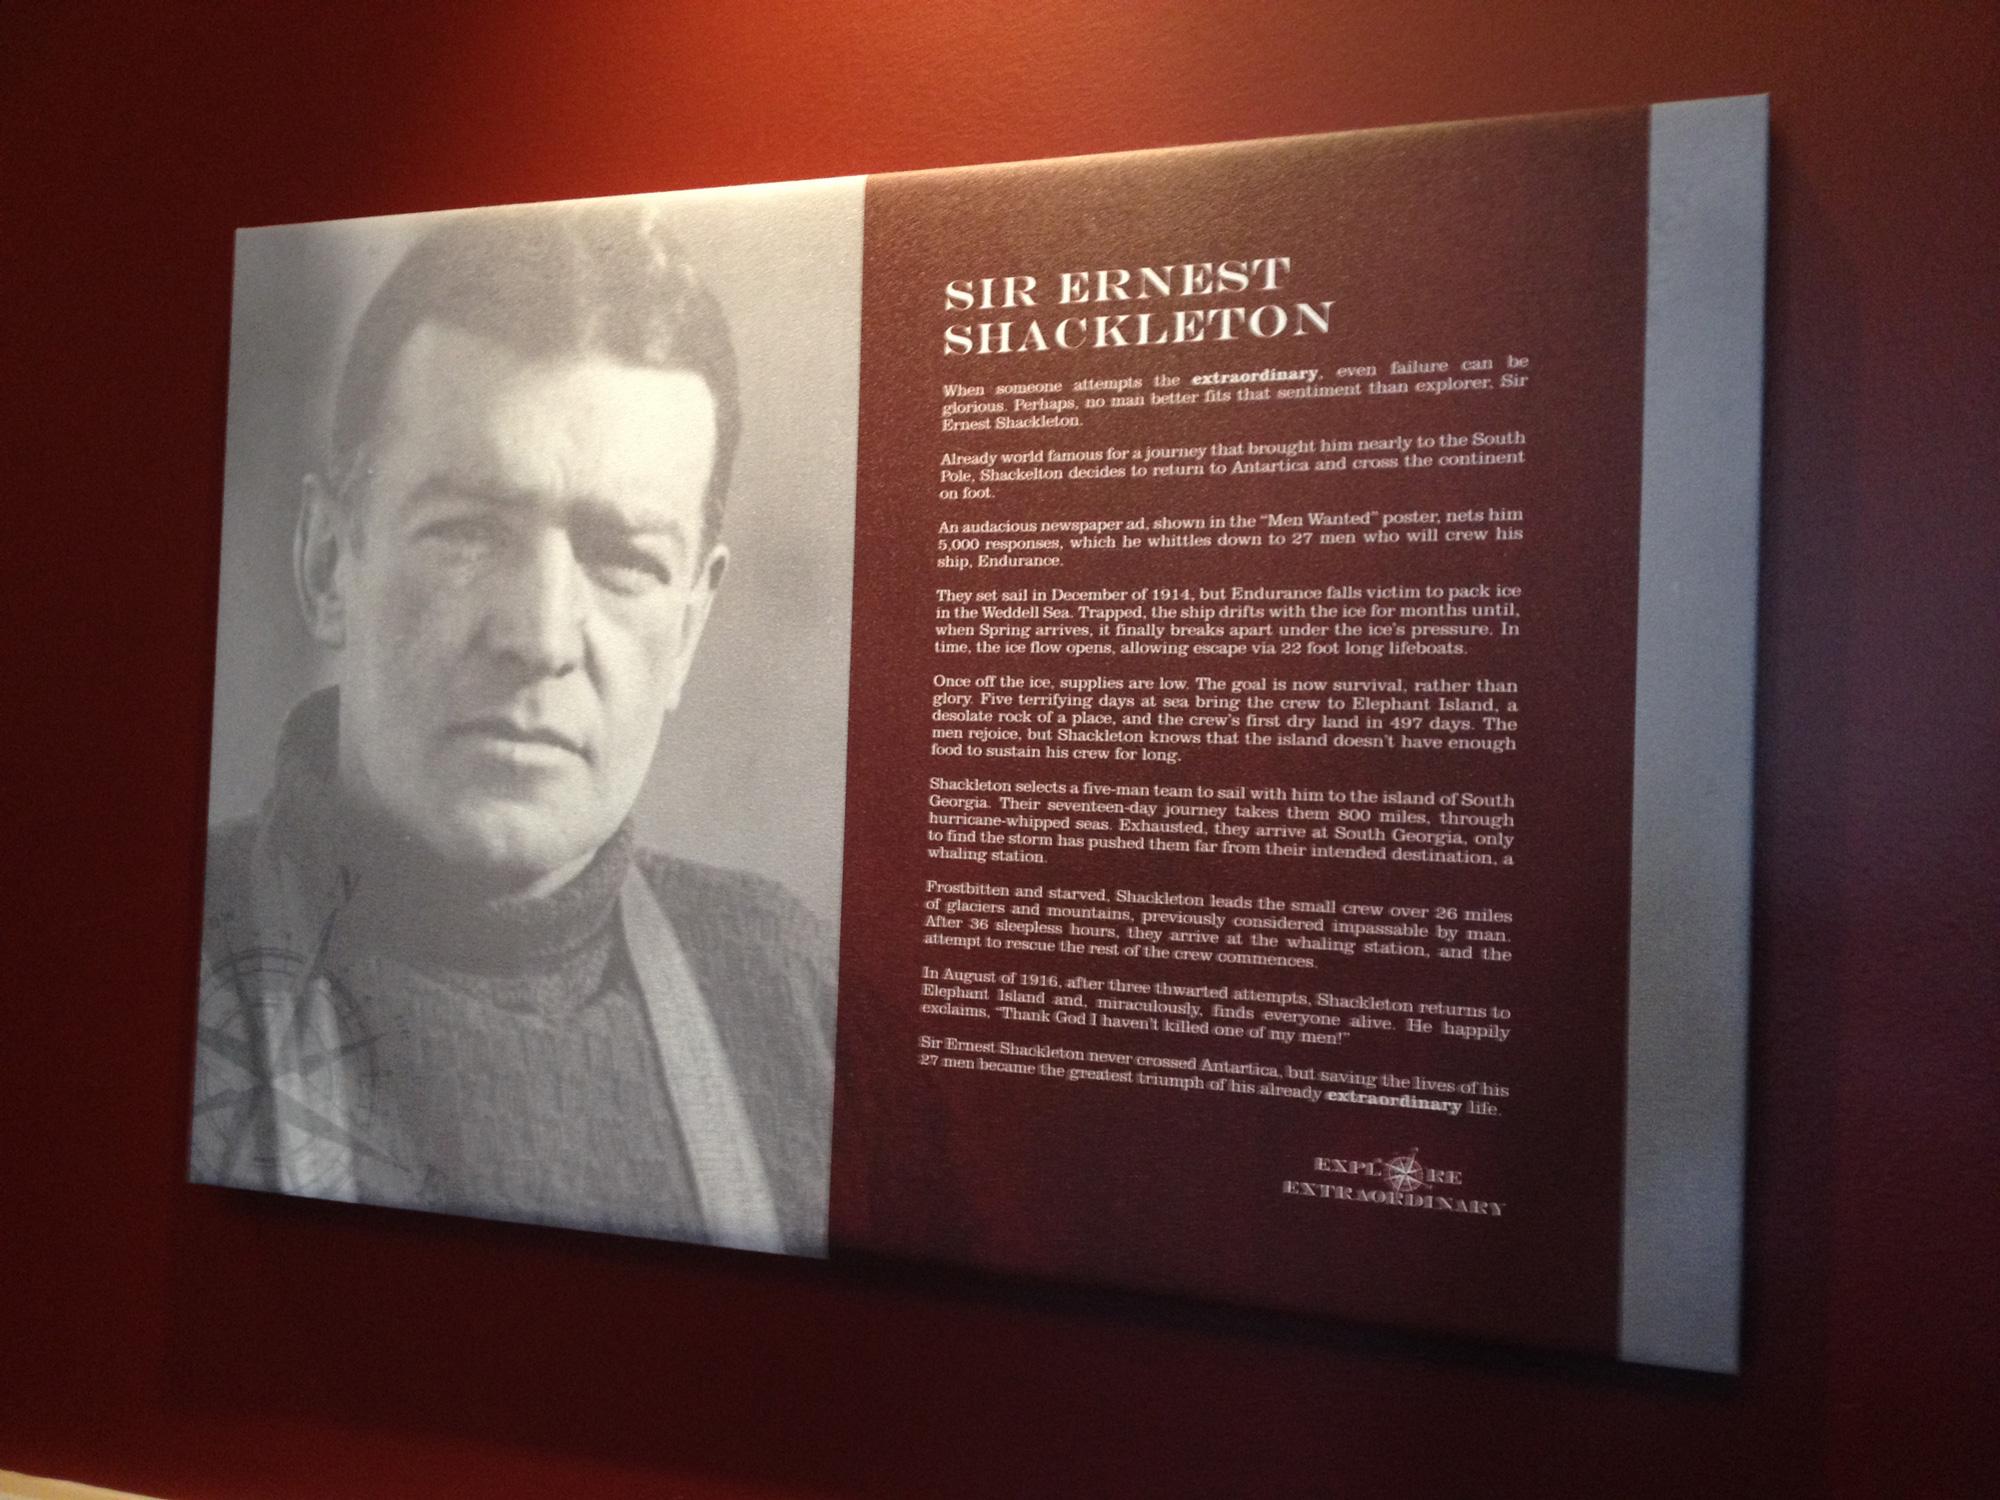 Headshot and biography text for explorer Ernest Shackleton